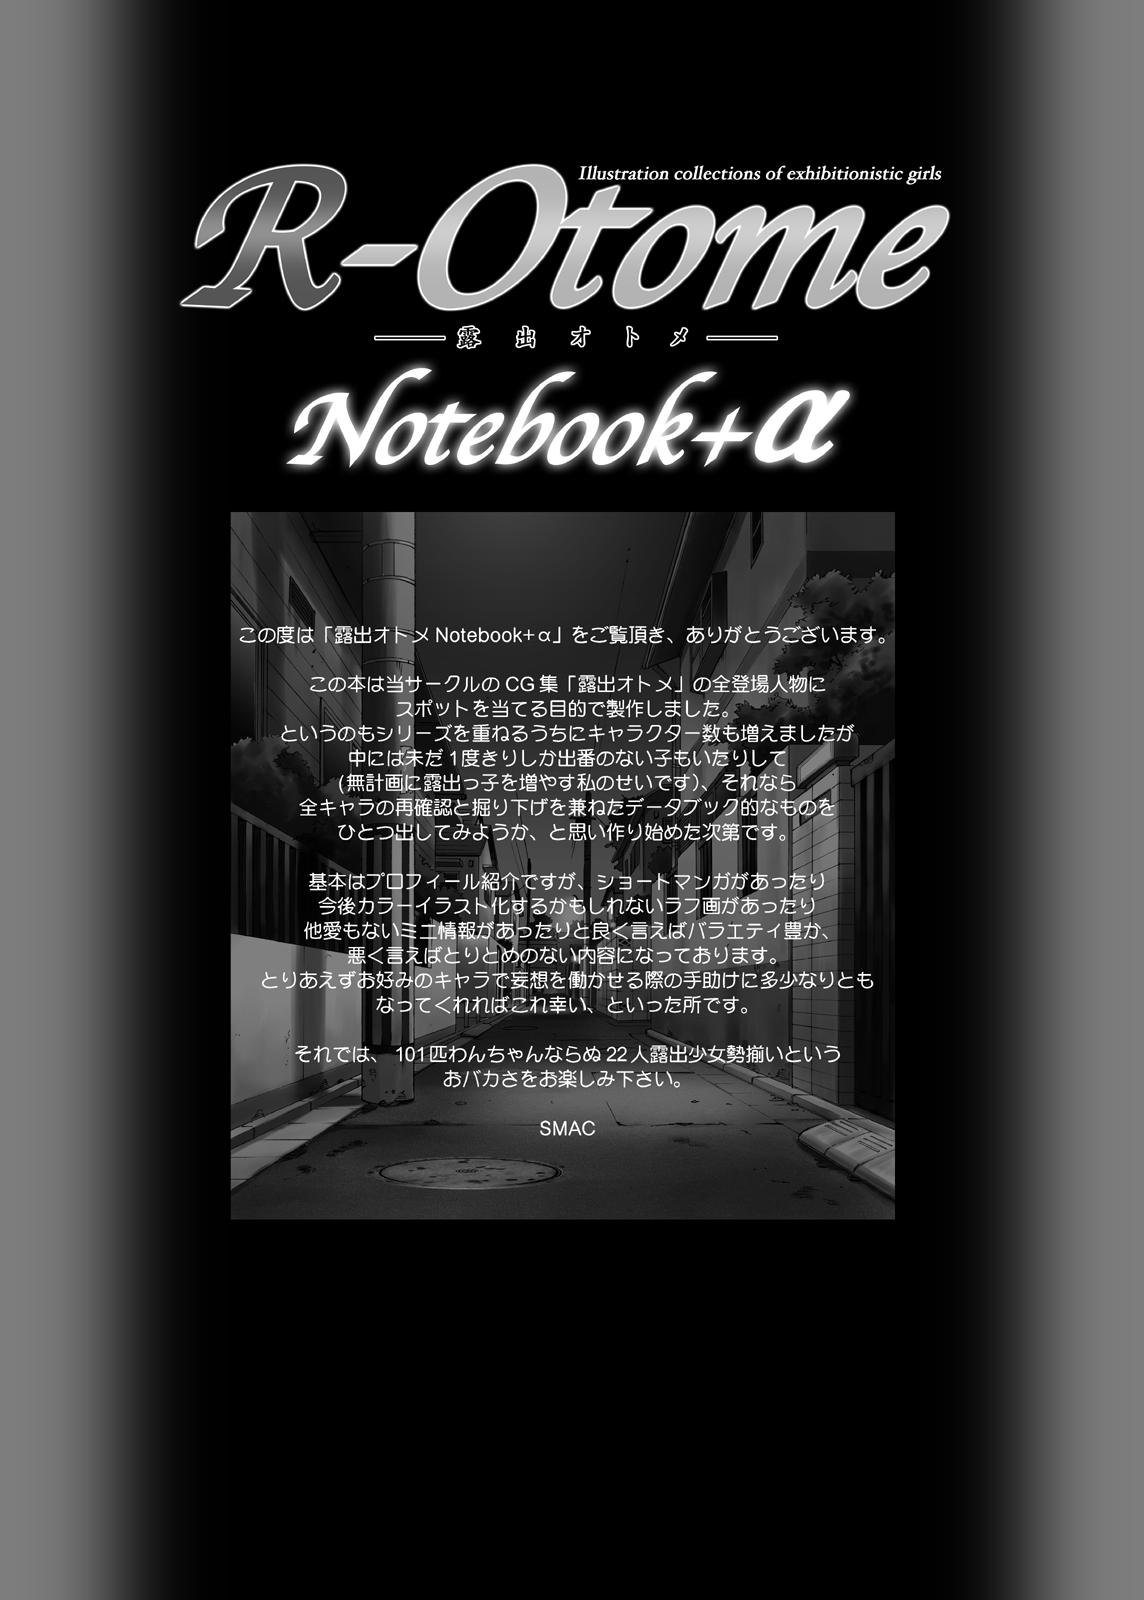 Roshutsu Otome Notebook+α 14